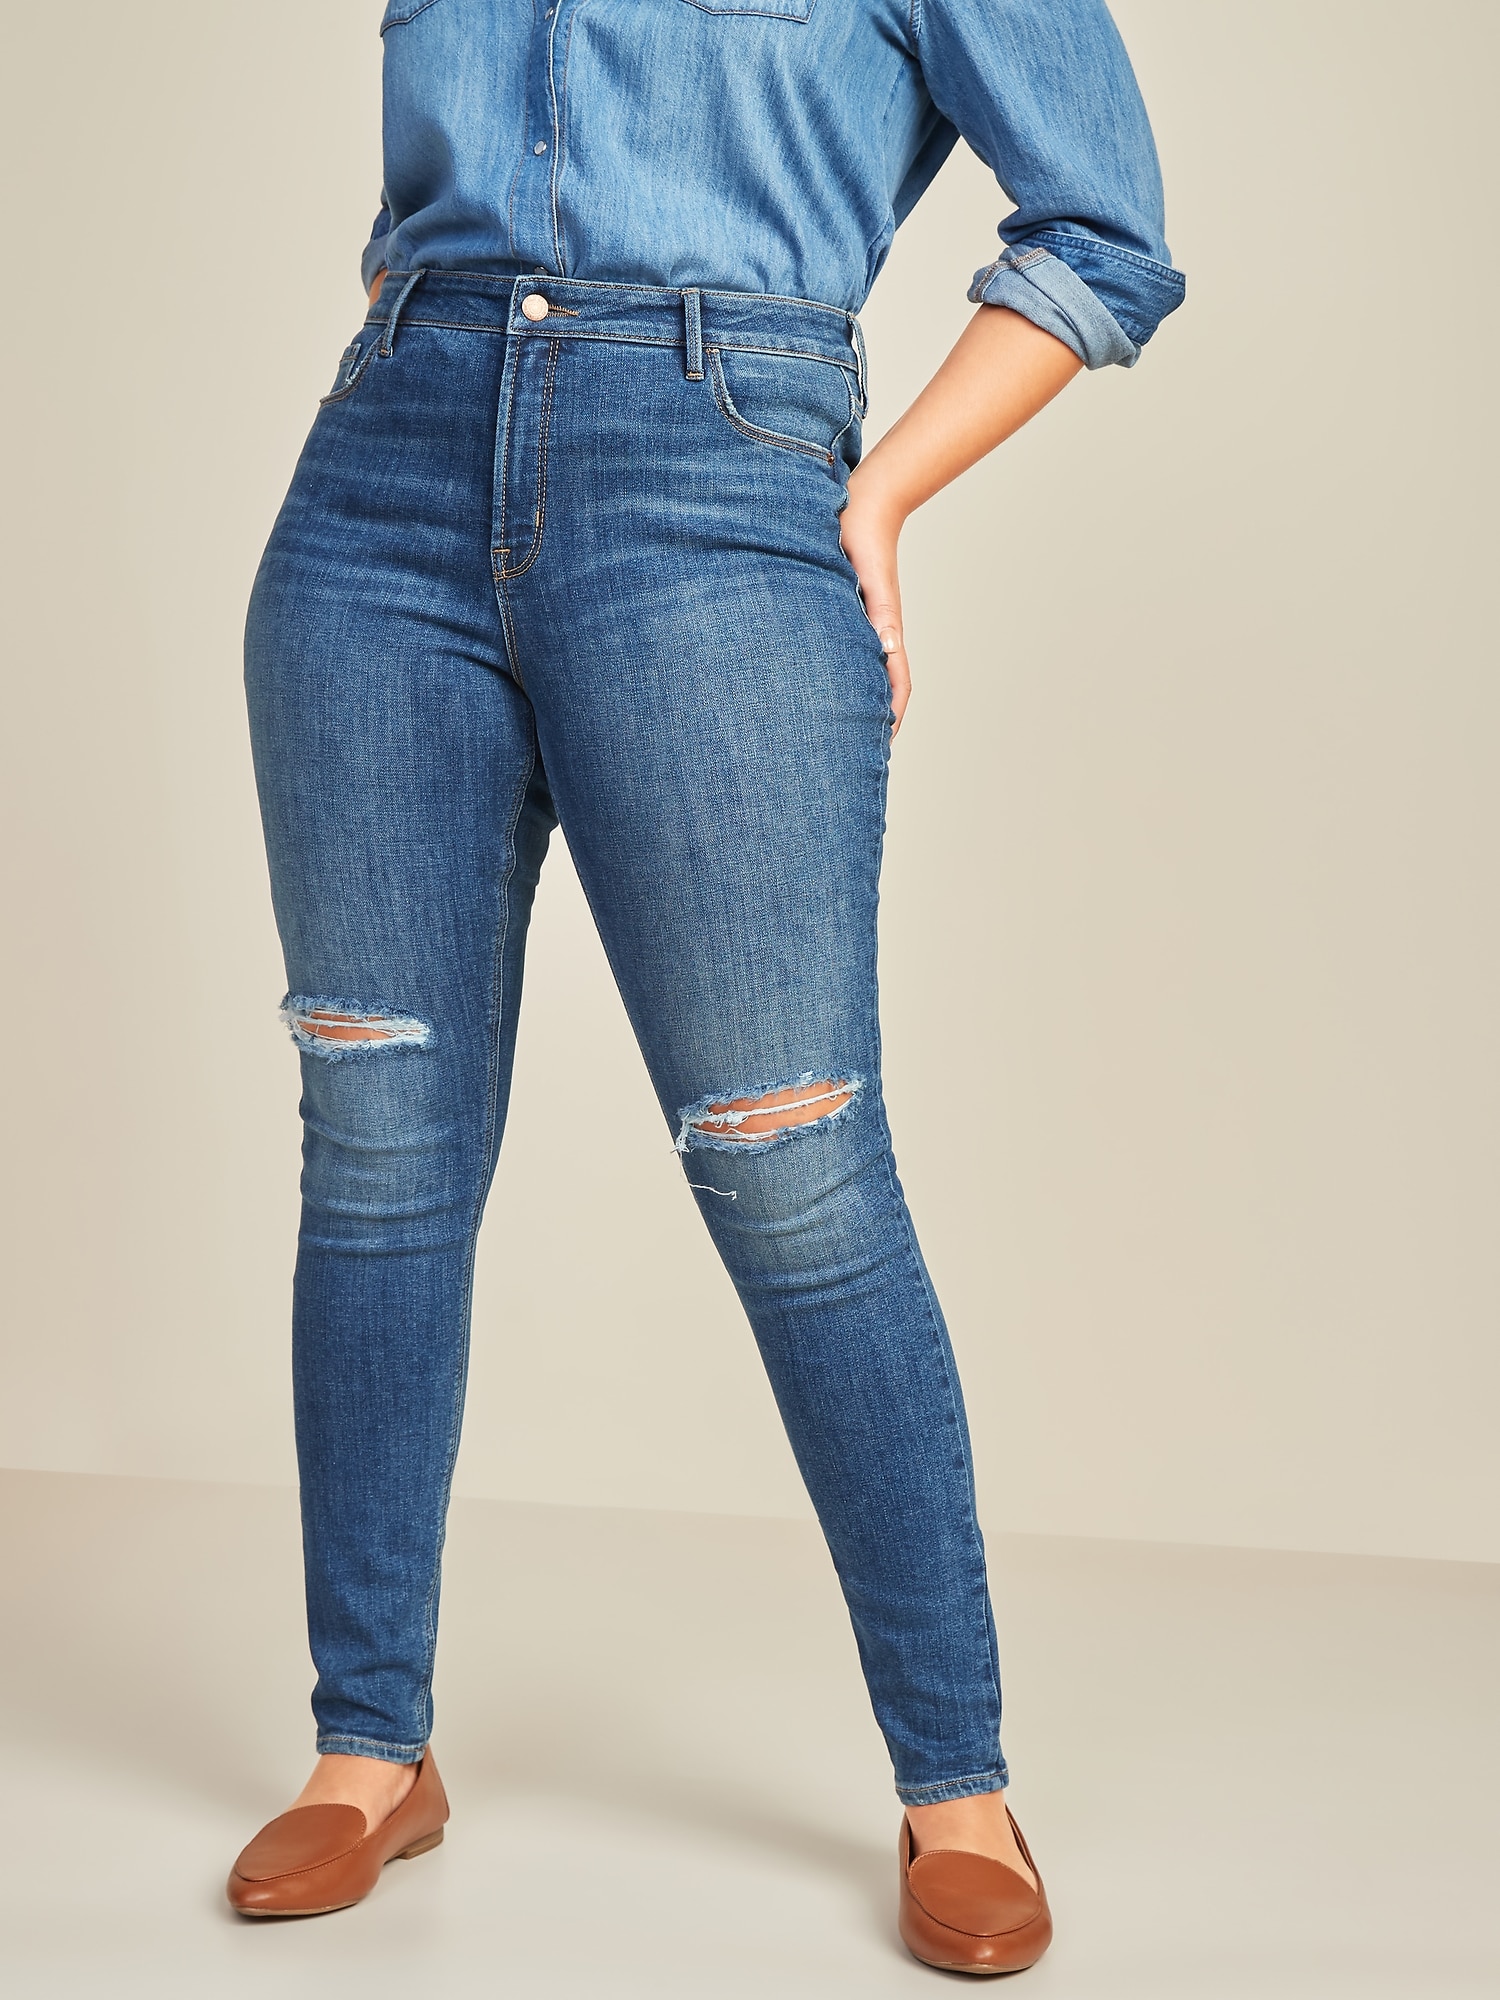 high waist tattered jeans